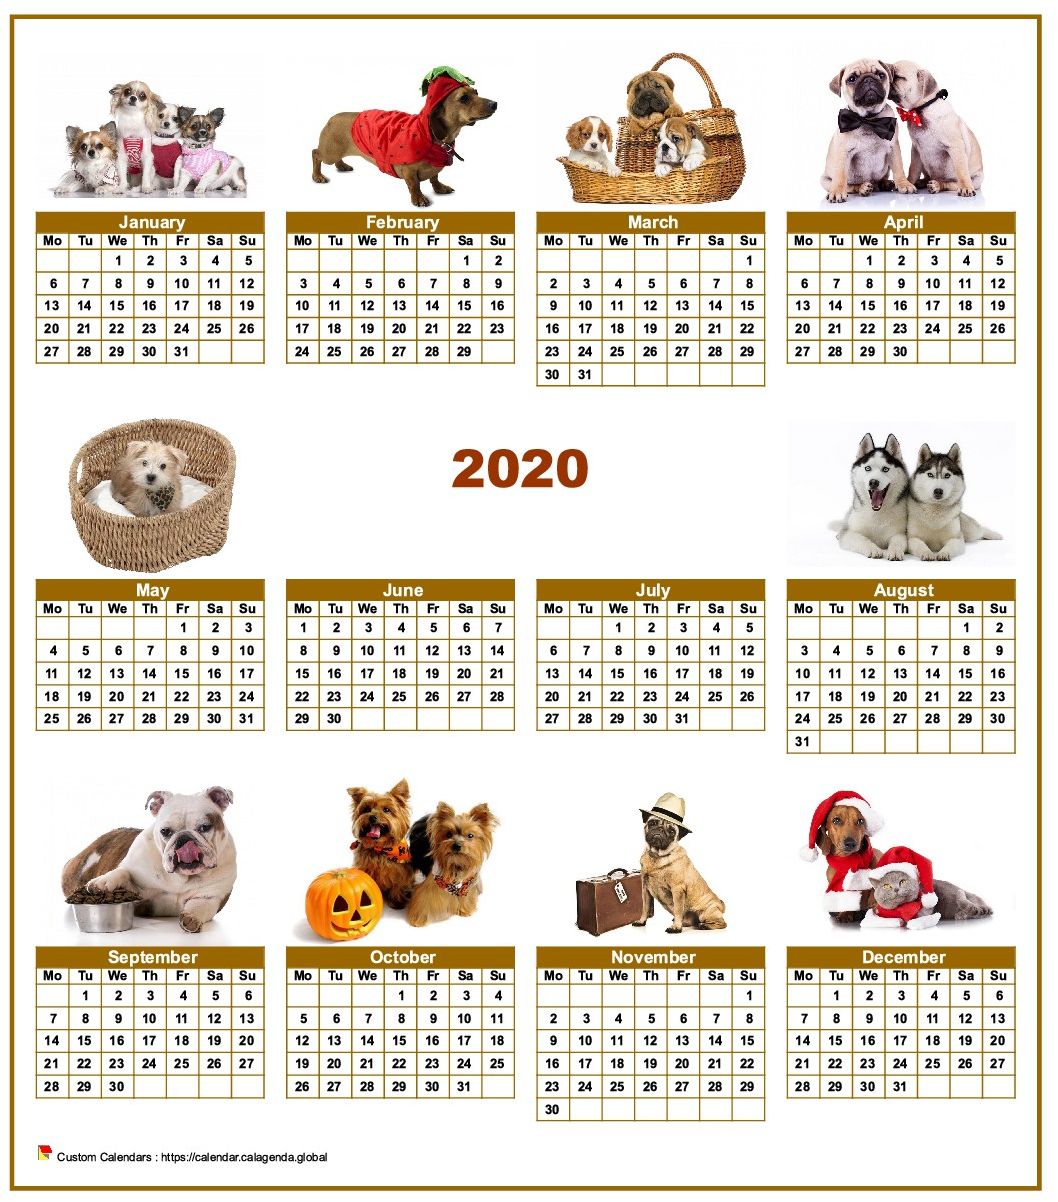 Calendar 2020 annual special 'dogs ' with 10 photos